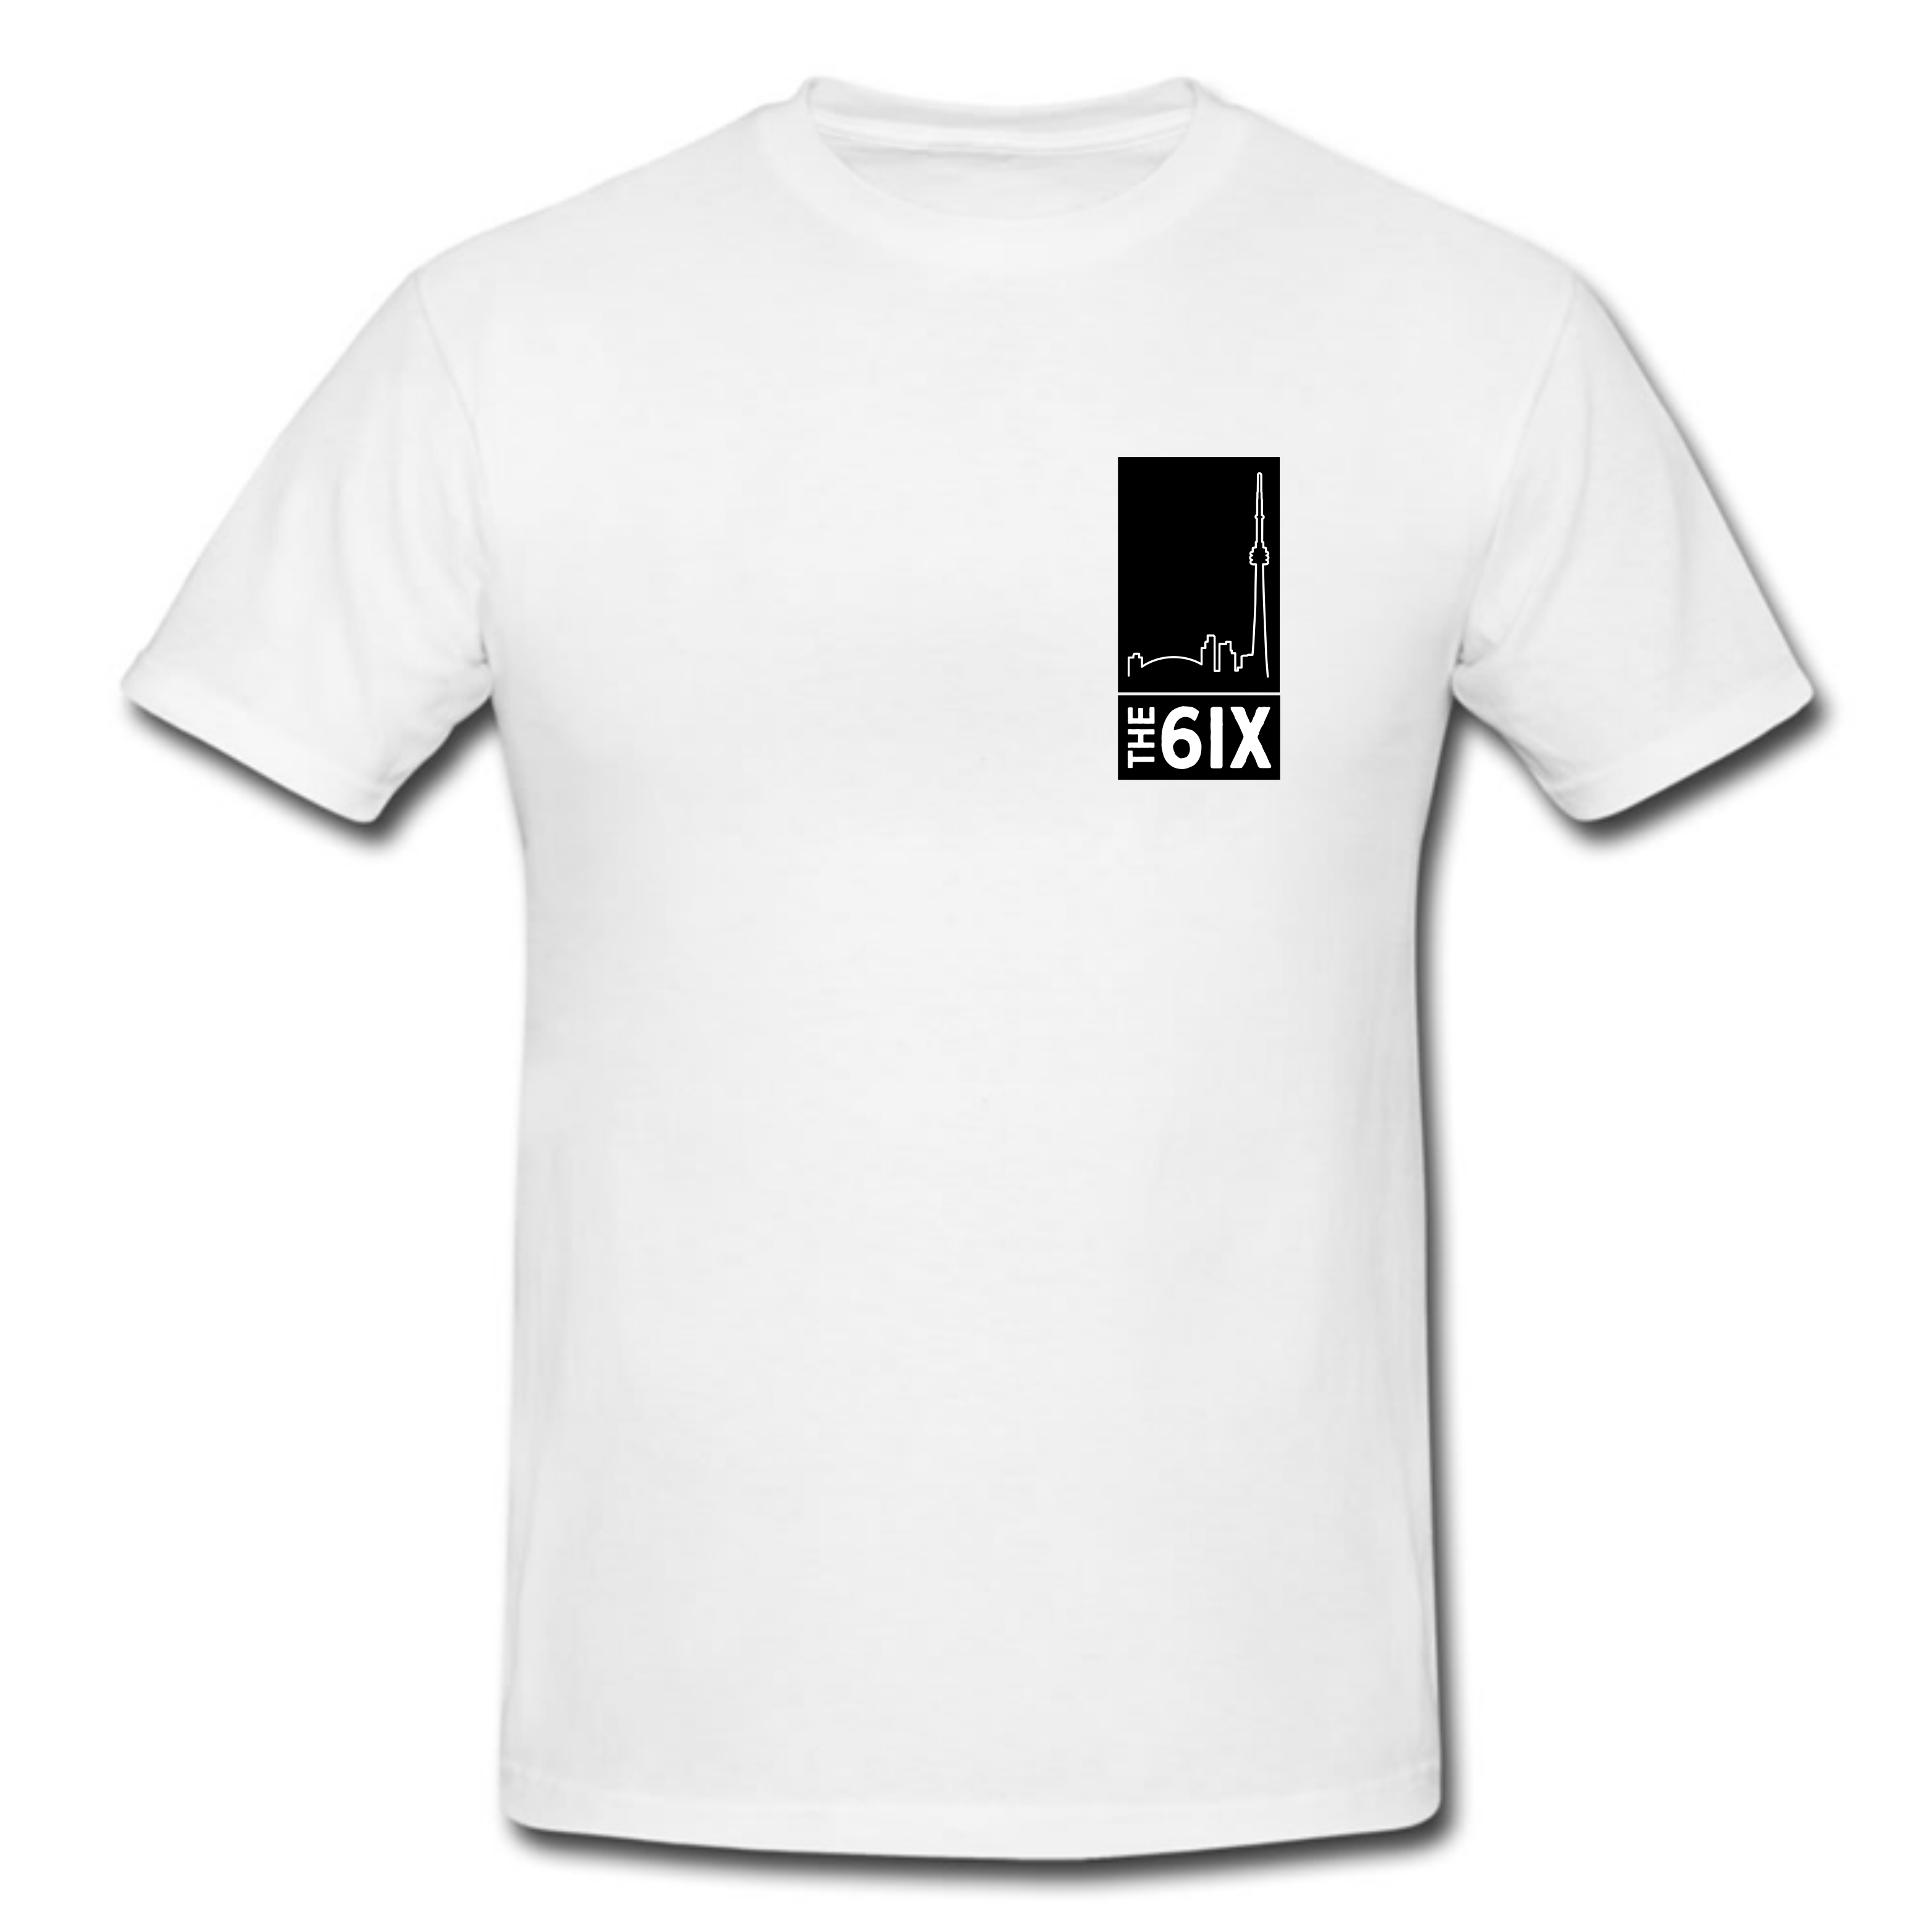 The 6ix Toronto T Shirt in White or Black